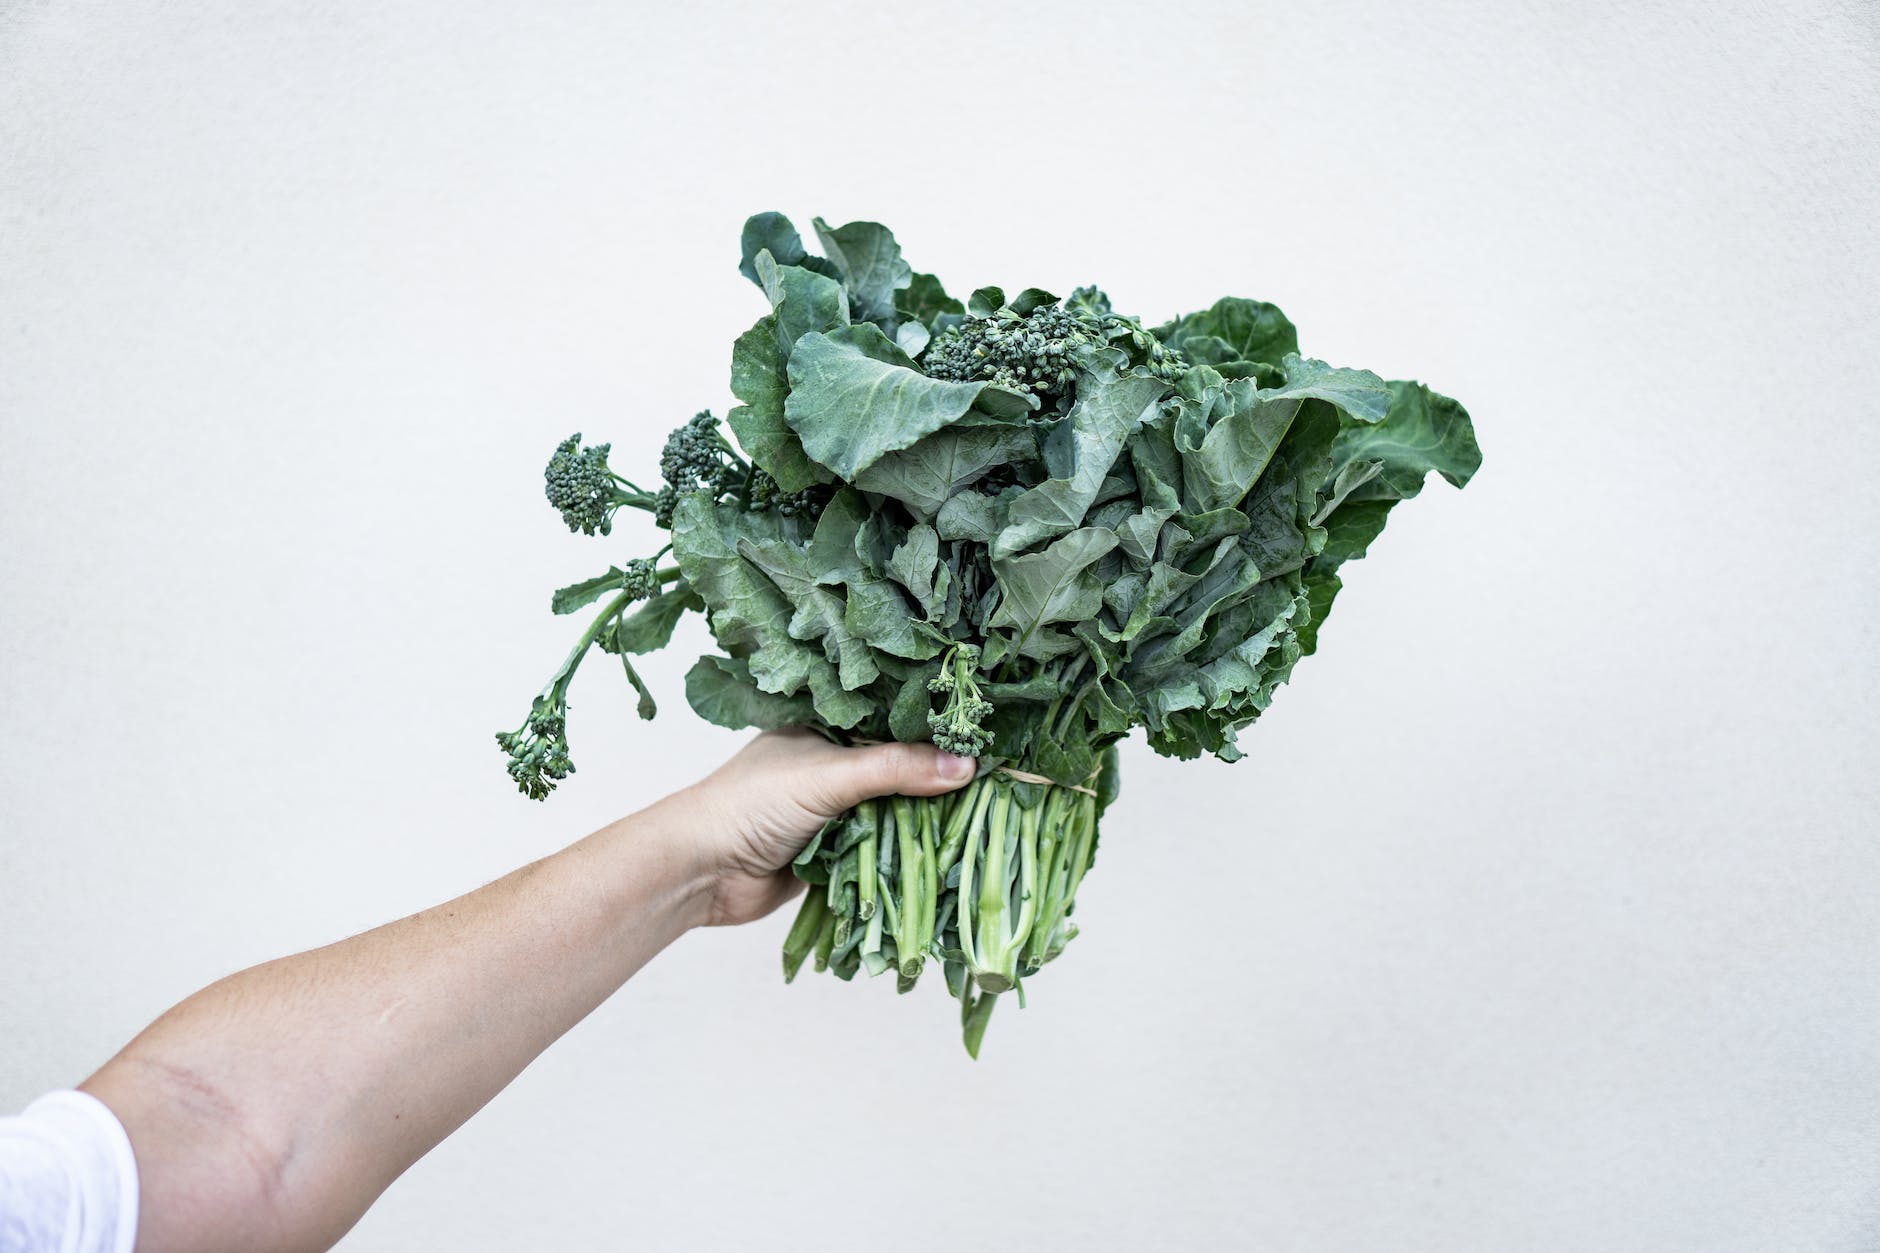 Superfood Benefits Of Kale & Kale Juice